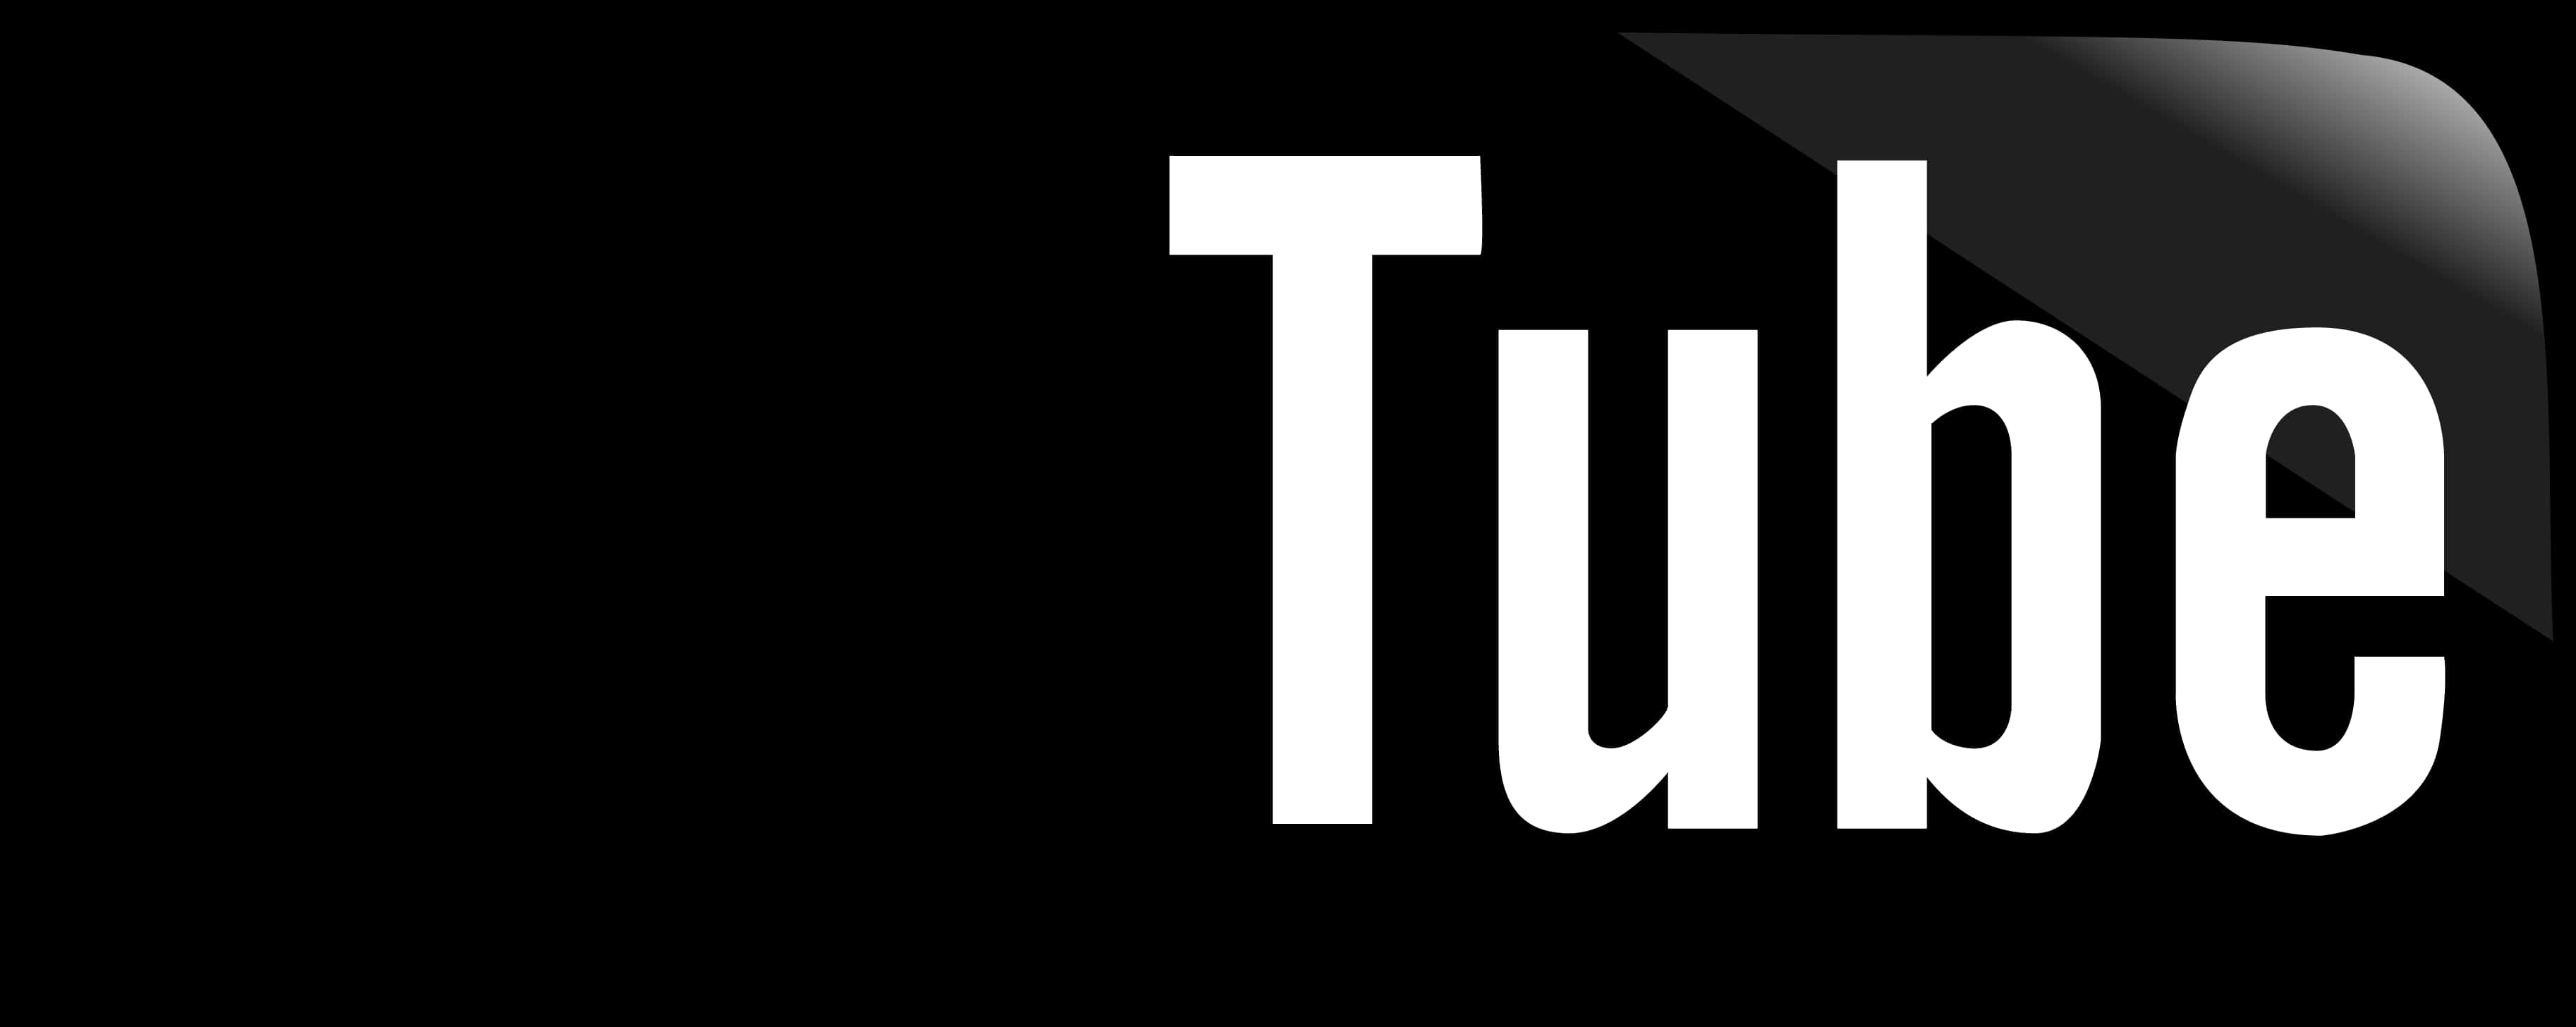 Black You Tube Logo